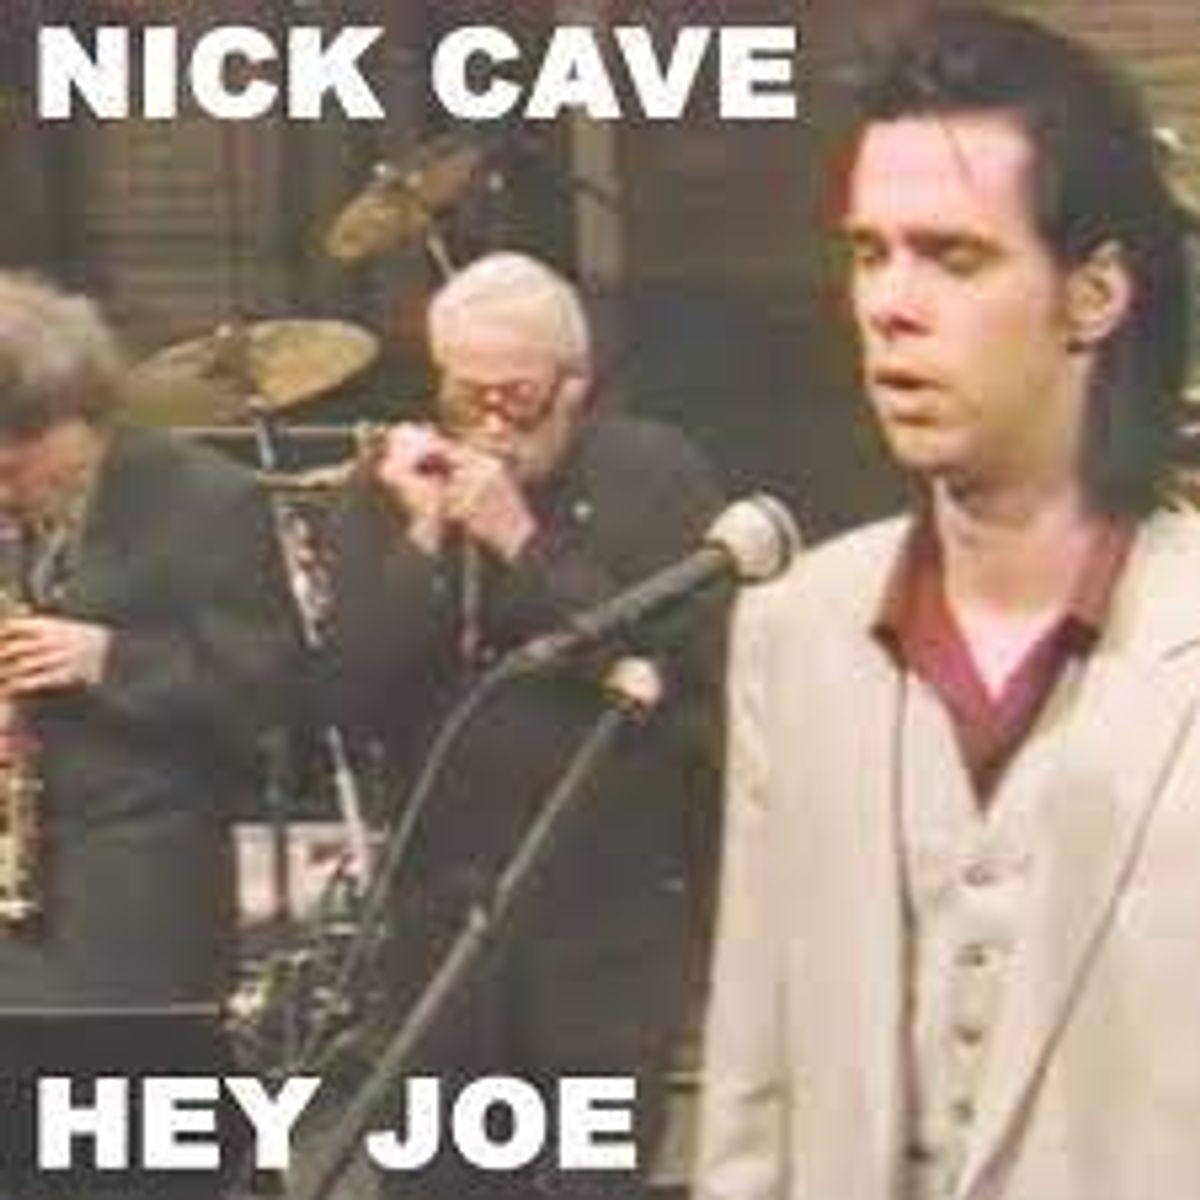 #Toots100 - Nick Cave, Mick Harvey, Toots Thielemans, ... - Hey Joe (1990)